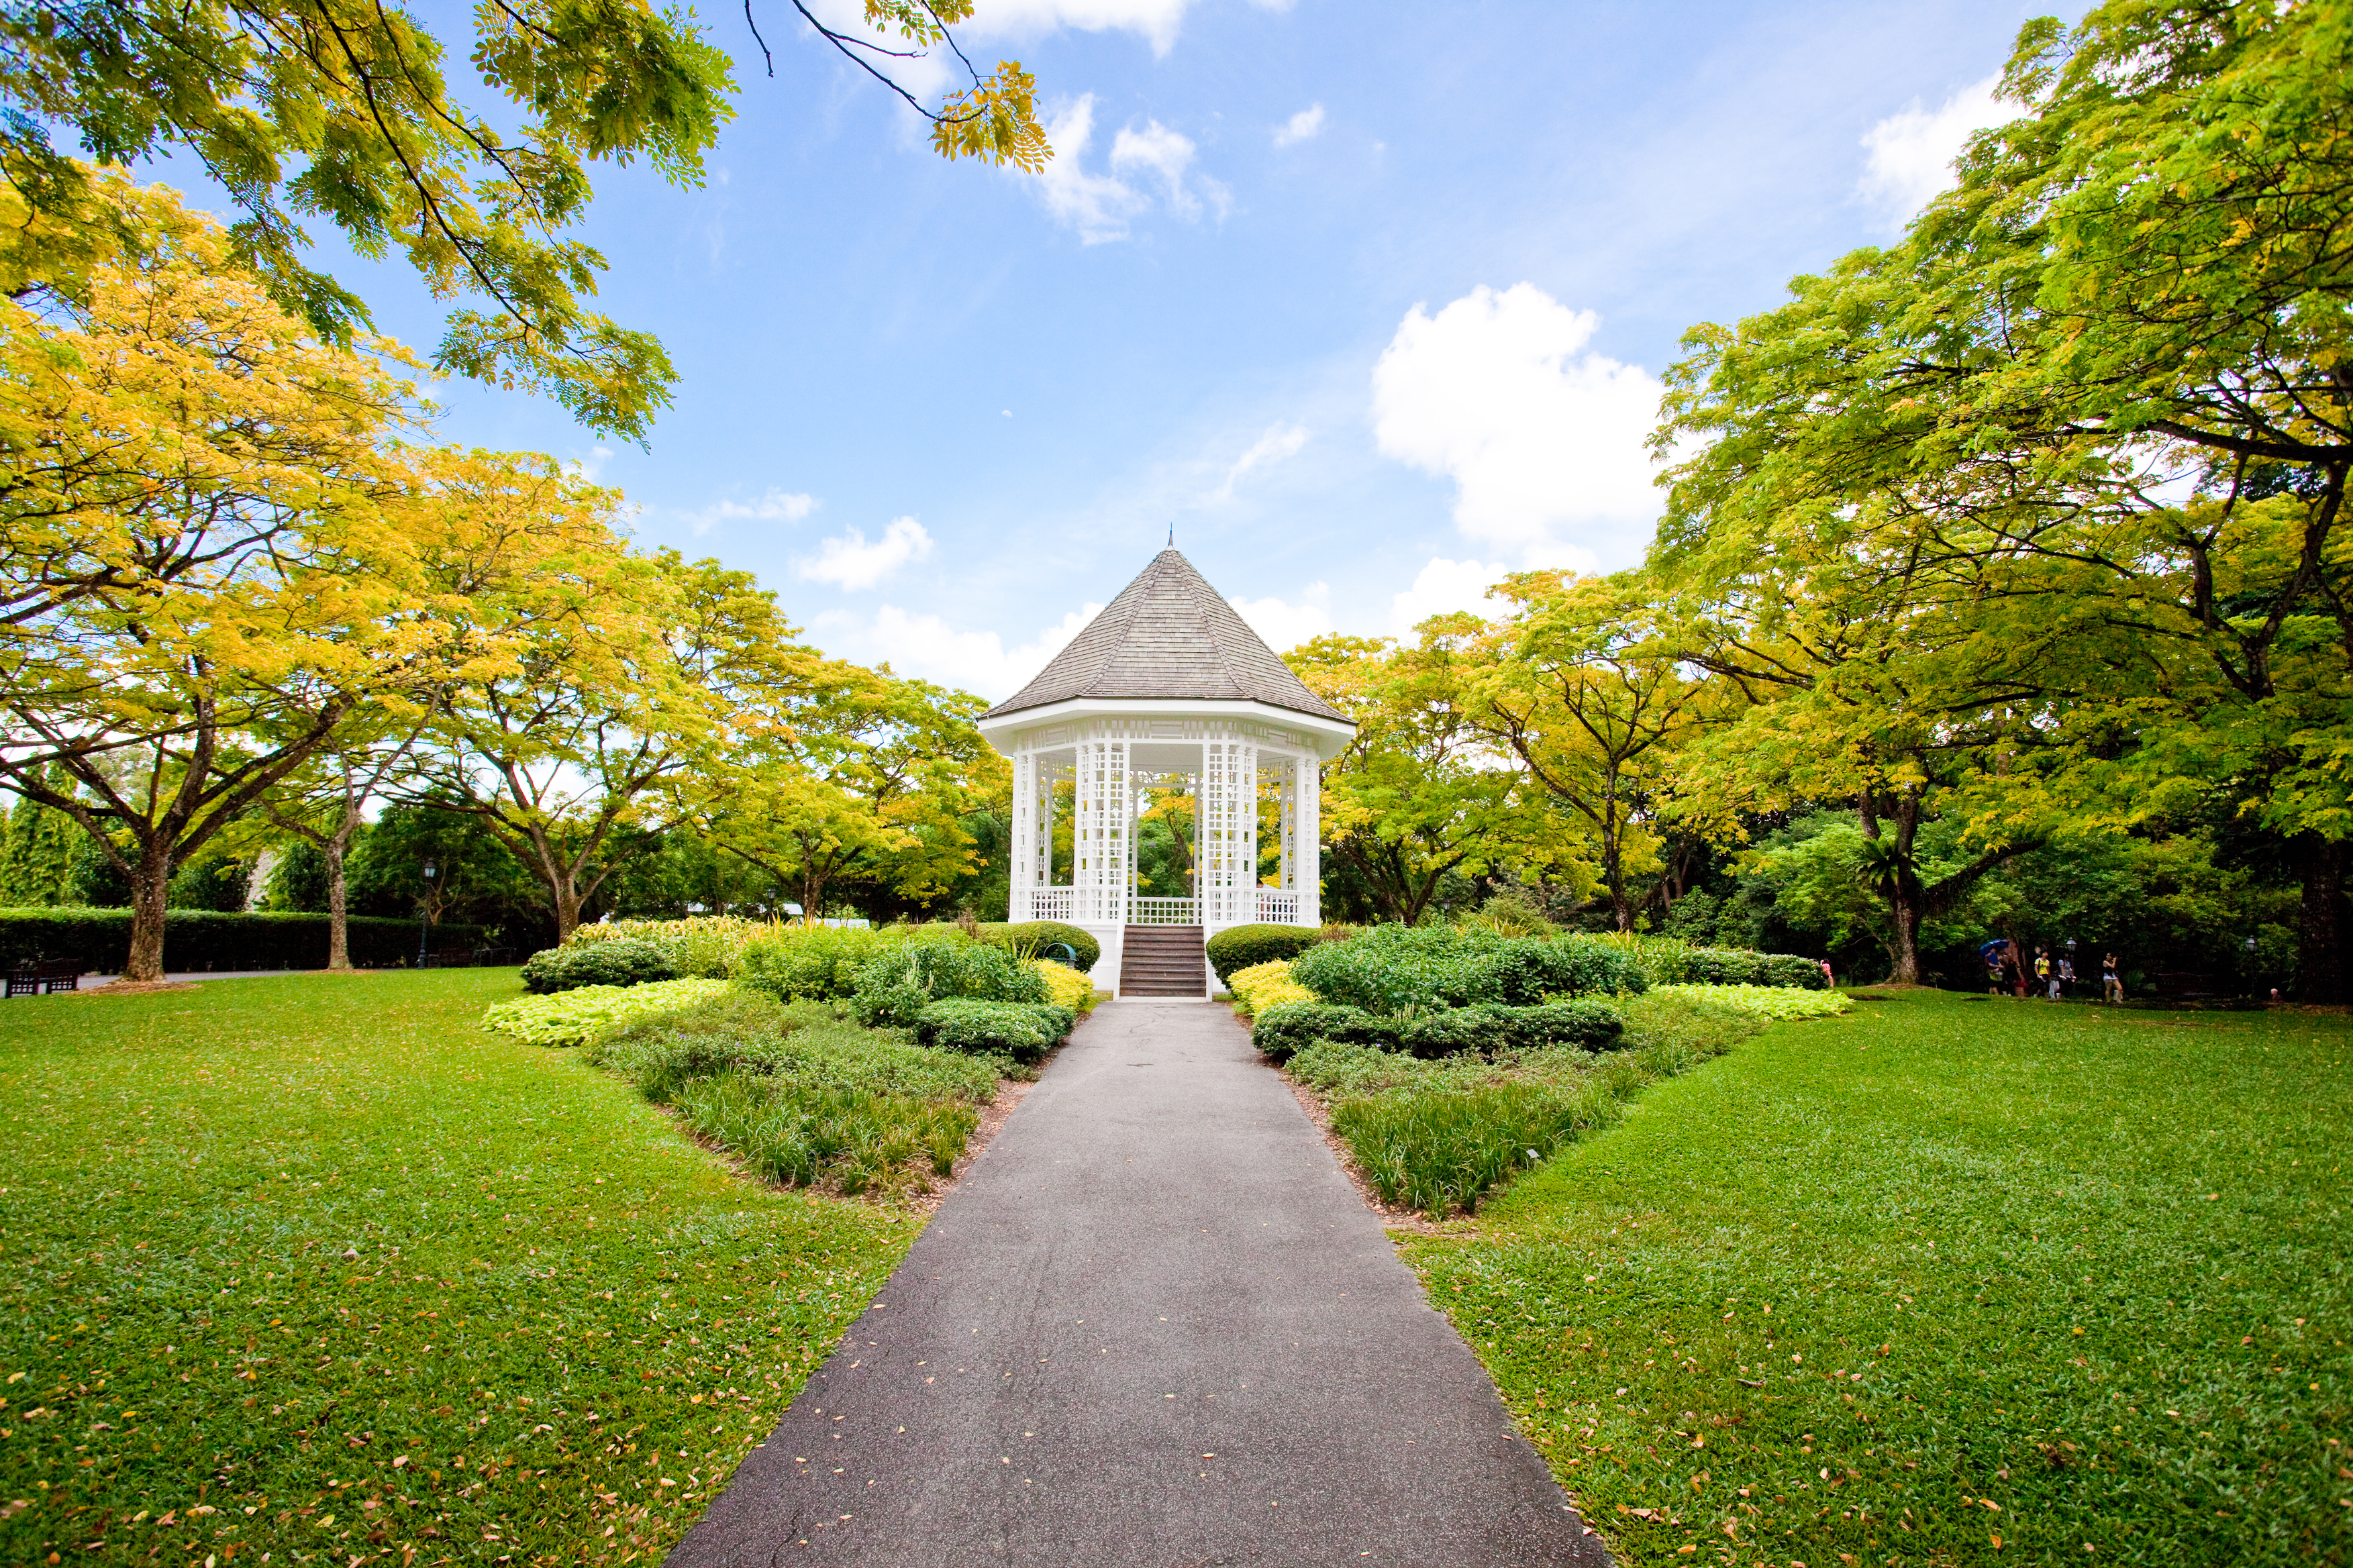 Singapore Botanic Gardens - Parks & Nature Reserves - Gardens, Parks & Nature - National Parks Board (NParks)